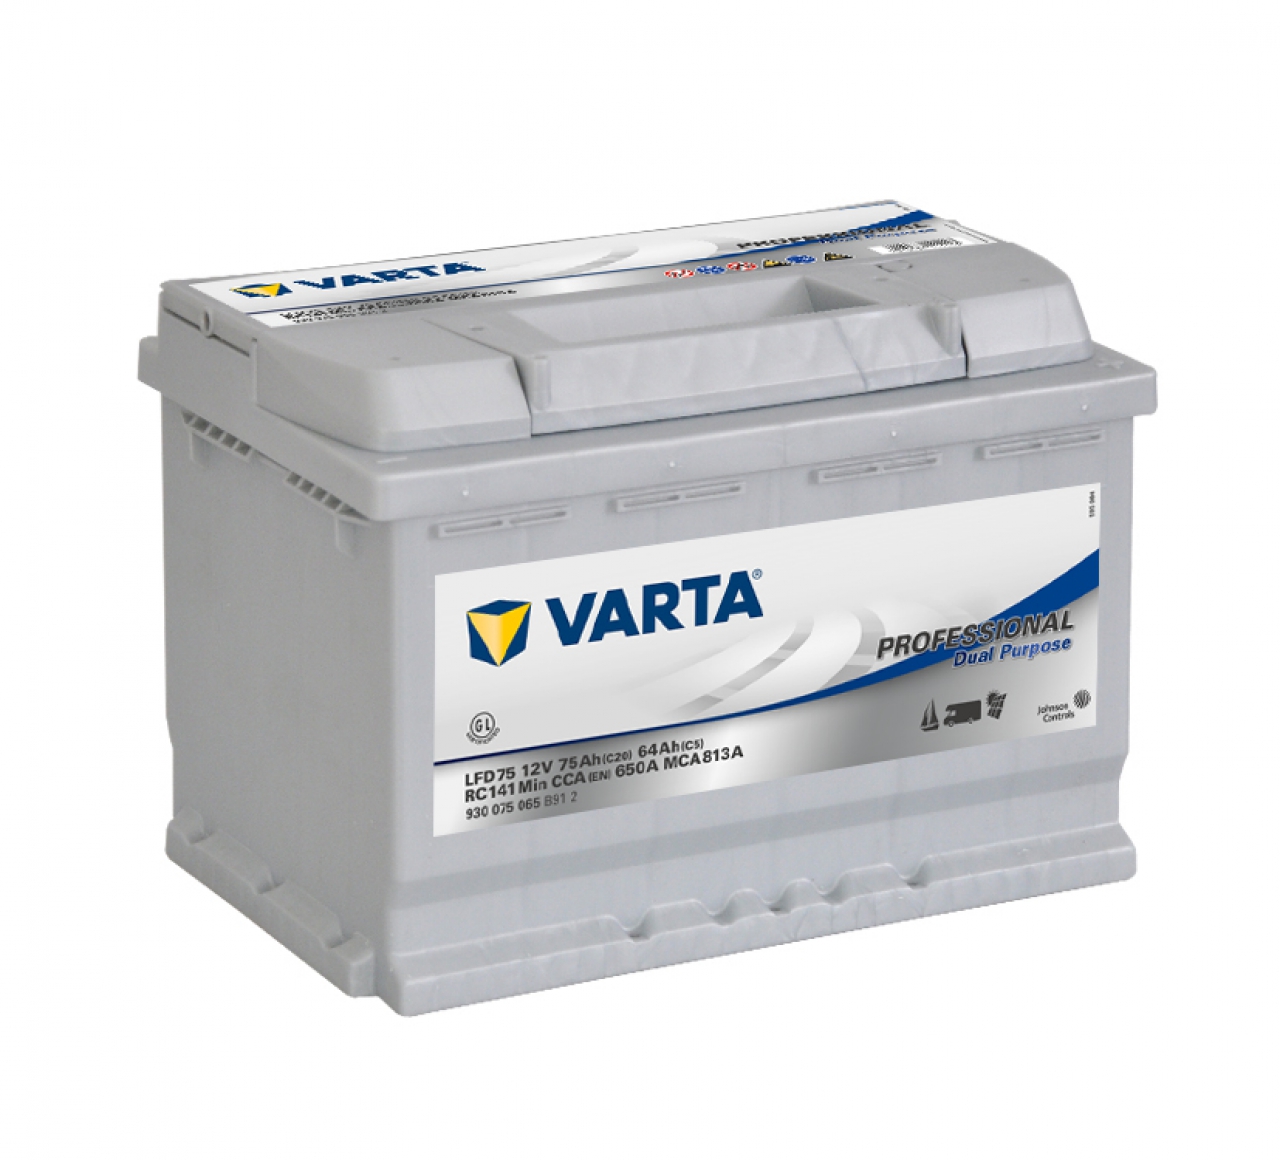 VARTA Professional Dual Purpose LFD75